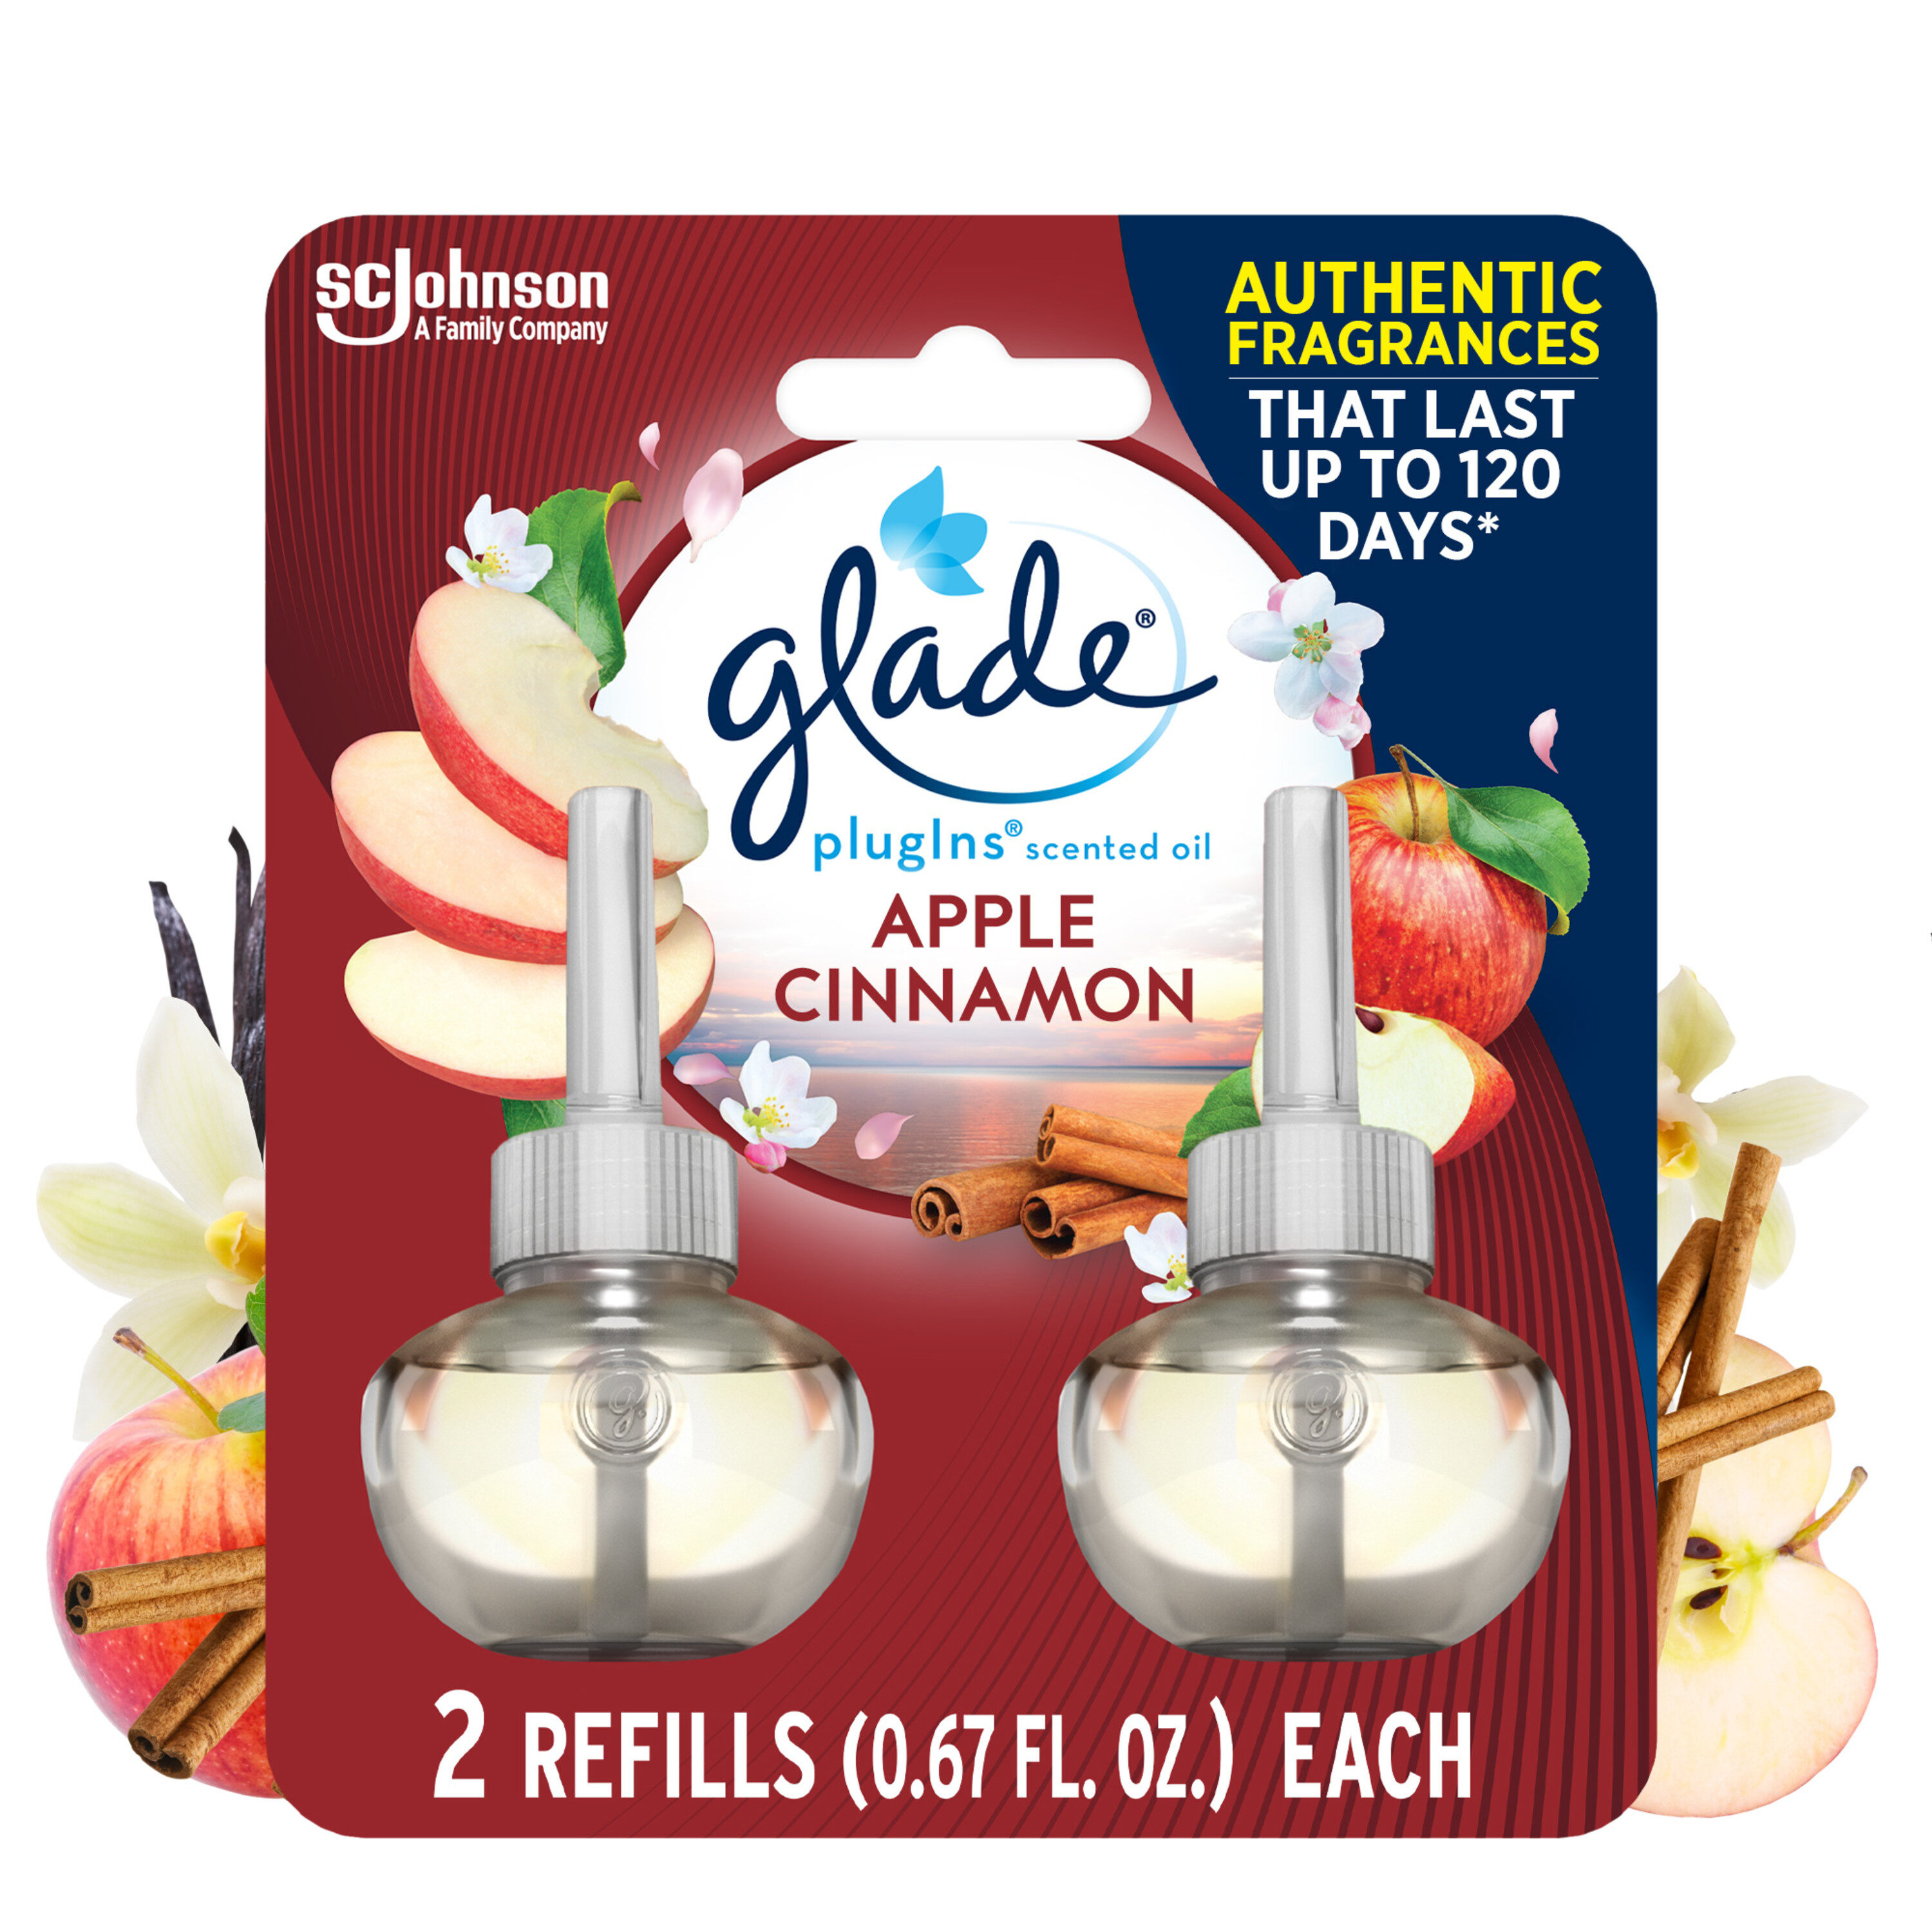 Glade PlugIns Scented Oil Air Freshener Refill, Apple Cinnamon - 2 refills, 1.34 fl oz packet